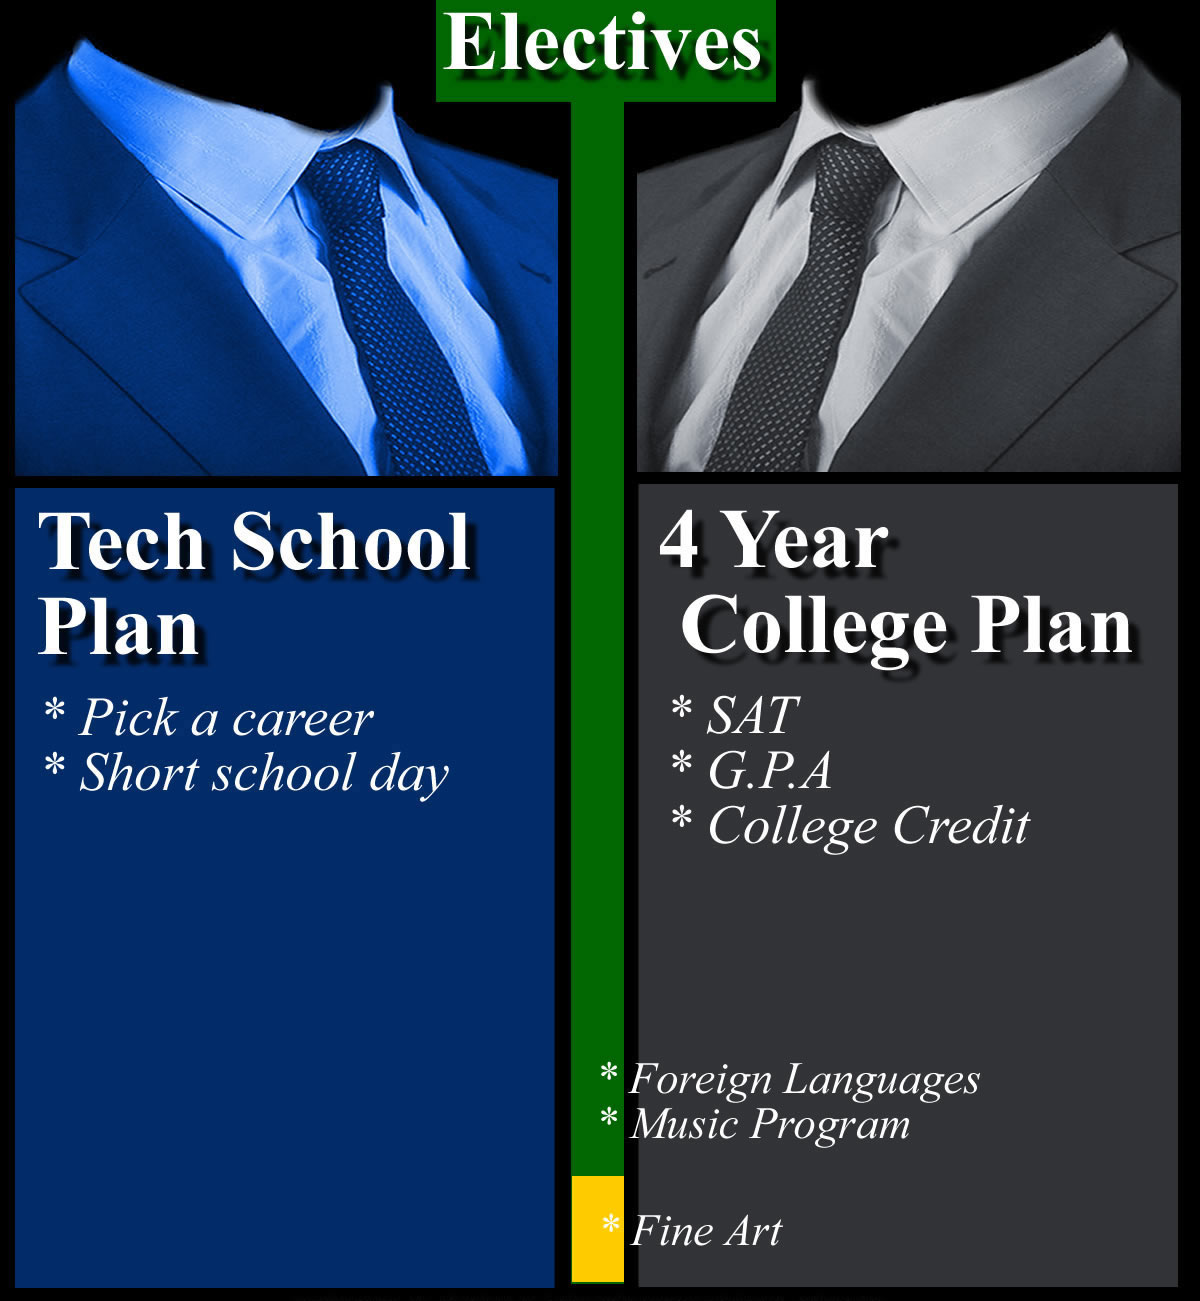 art-school-education-student-teach-college-electives-career-tie-suit